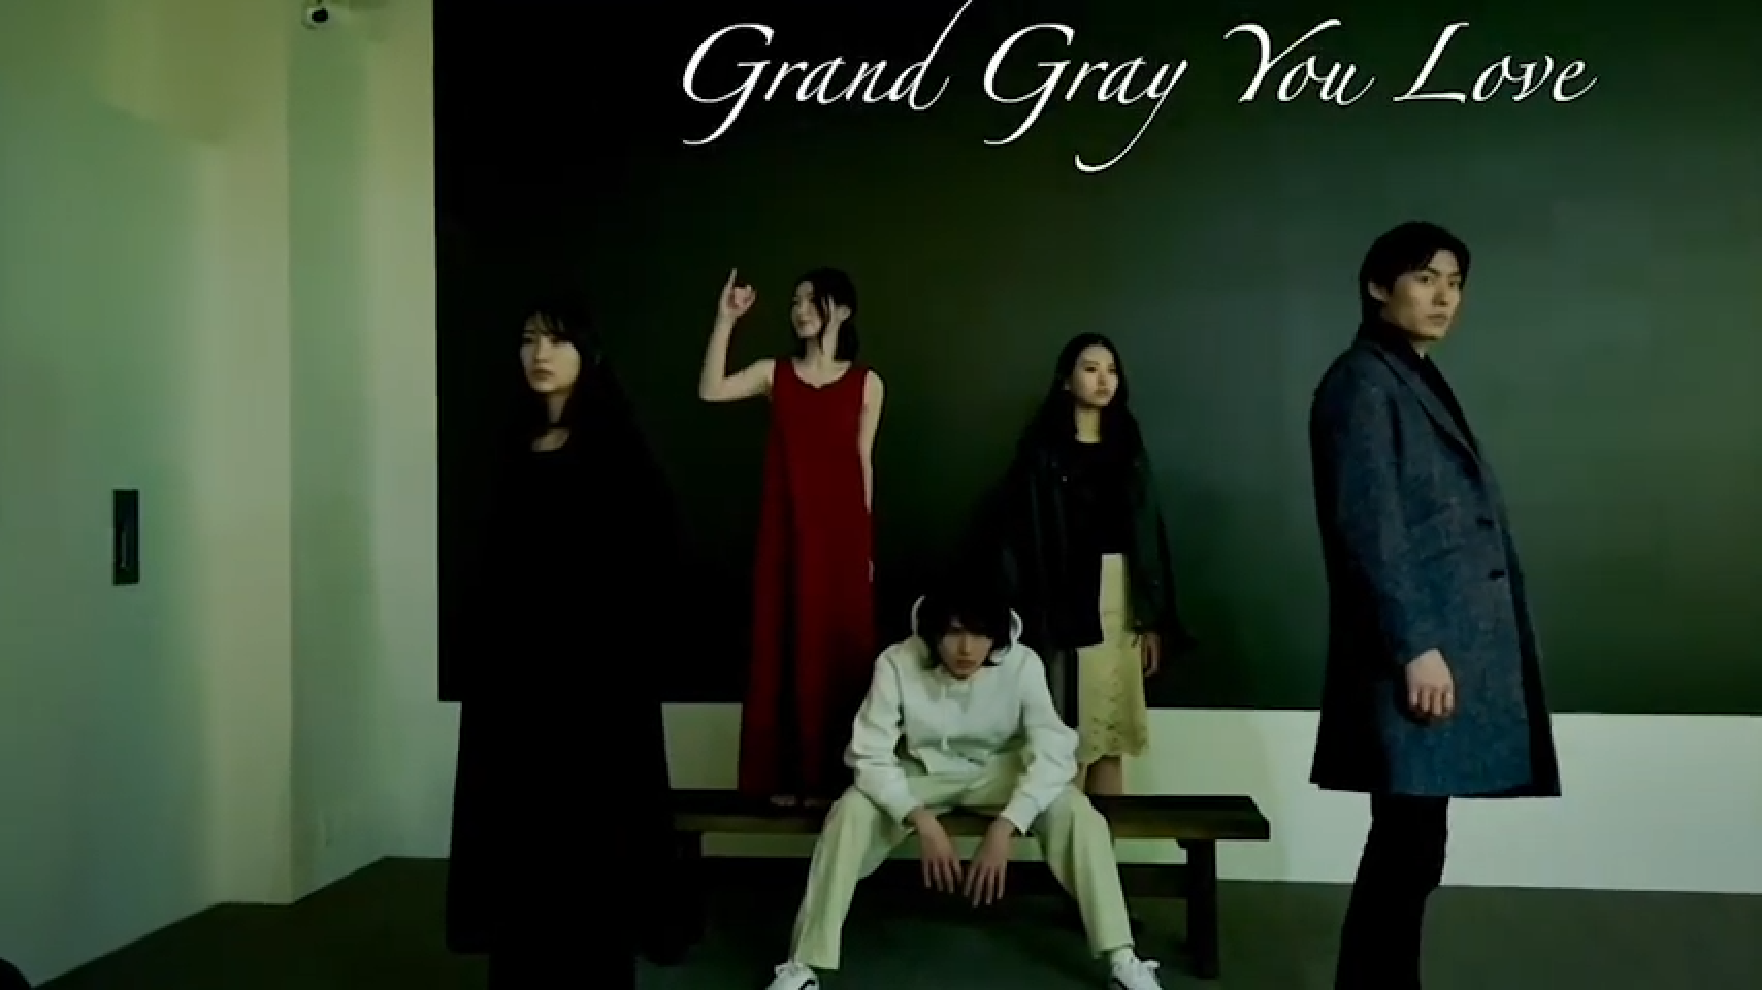 Grand Gray You Love